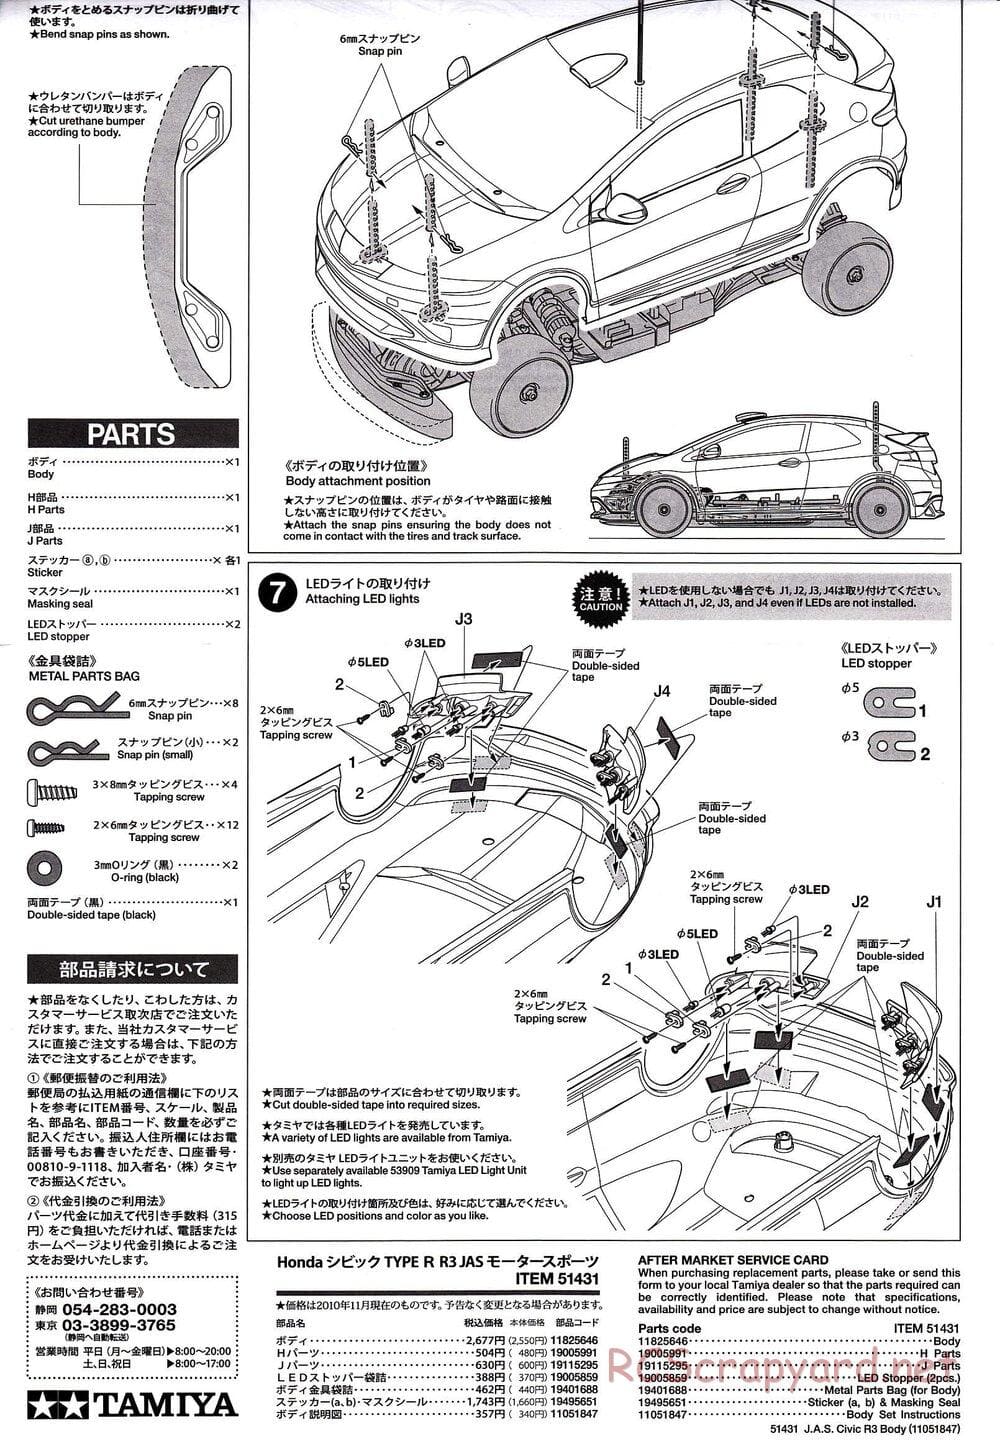 Tamiya - Honda Civic Type-R R3 JAS Motorsport - FF-03 Chassis - Body Manual - Page 4